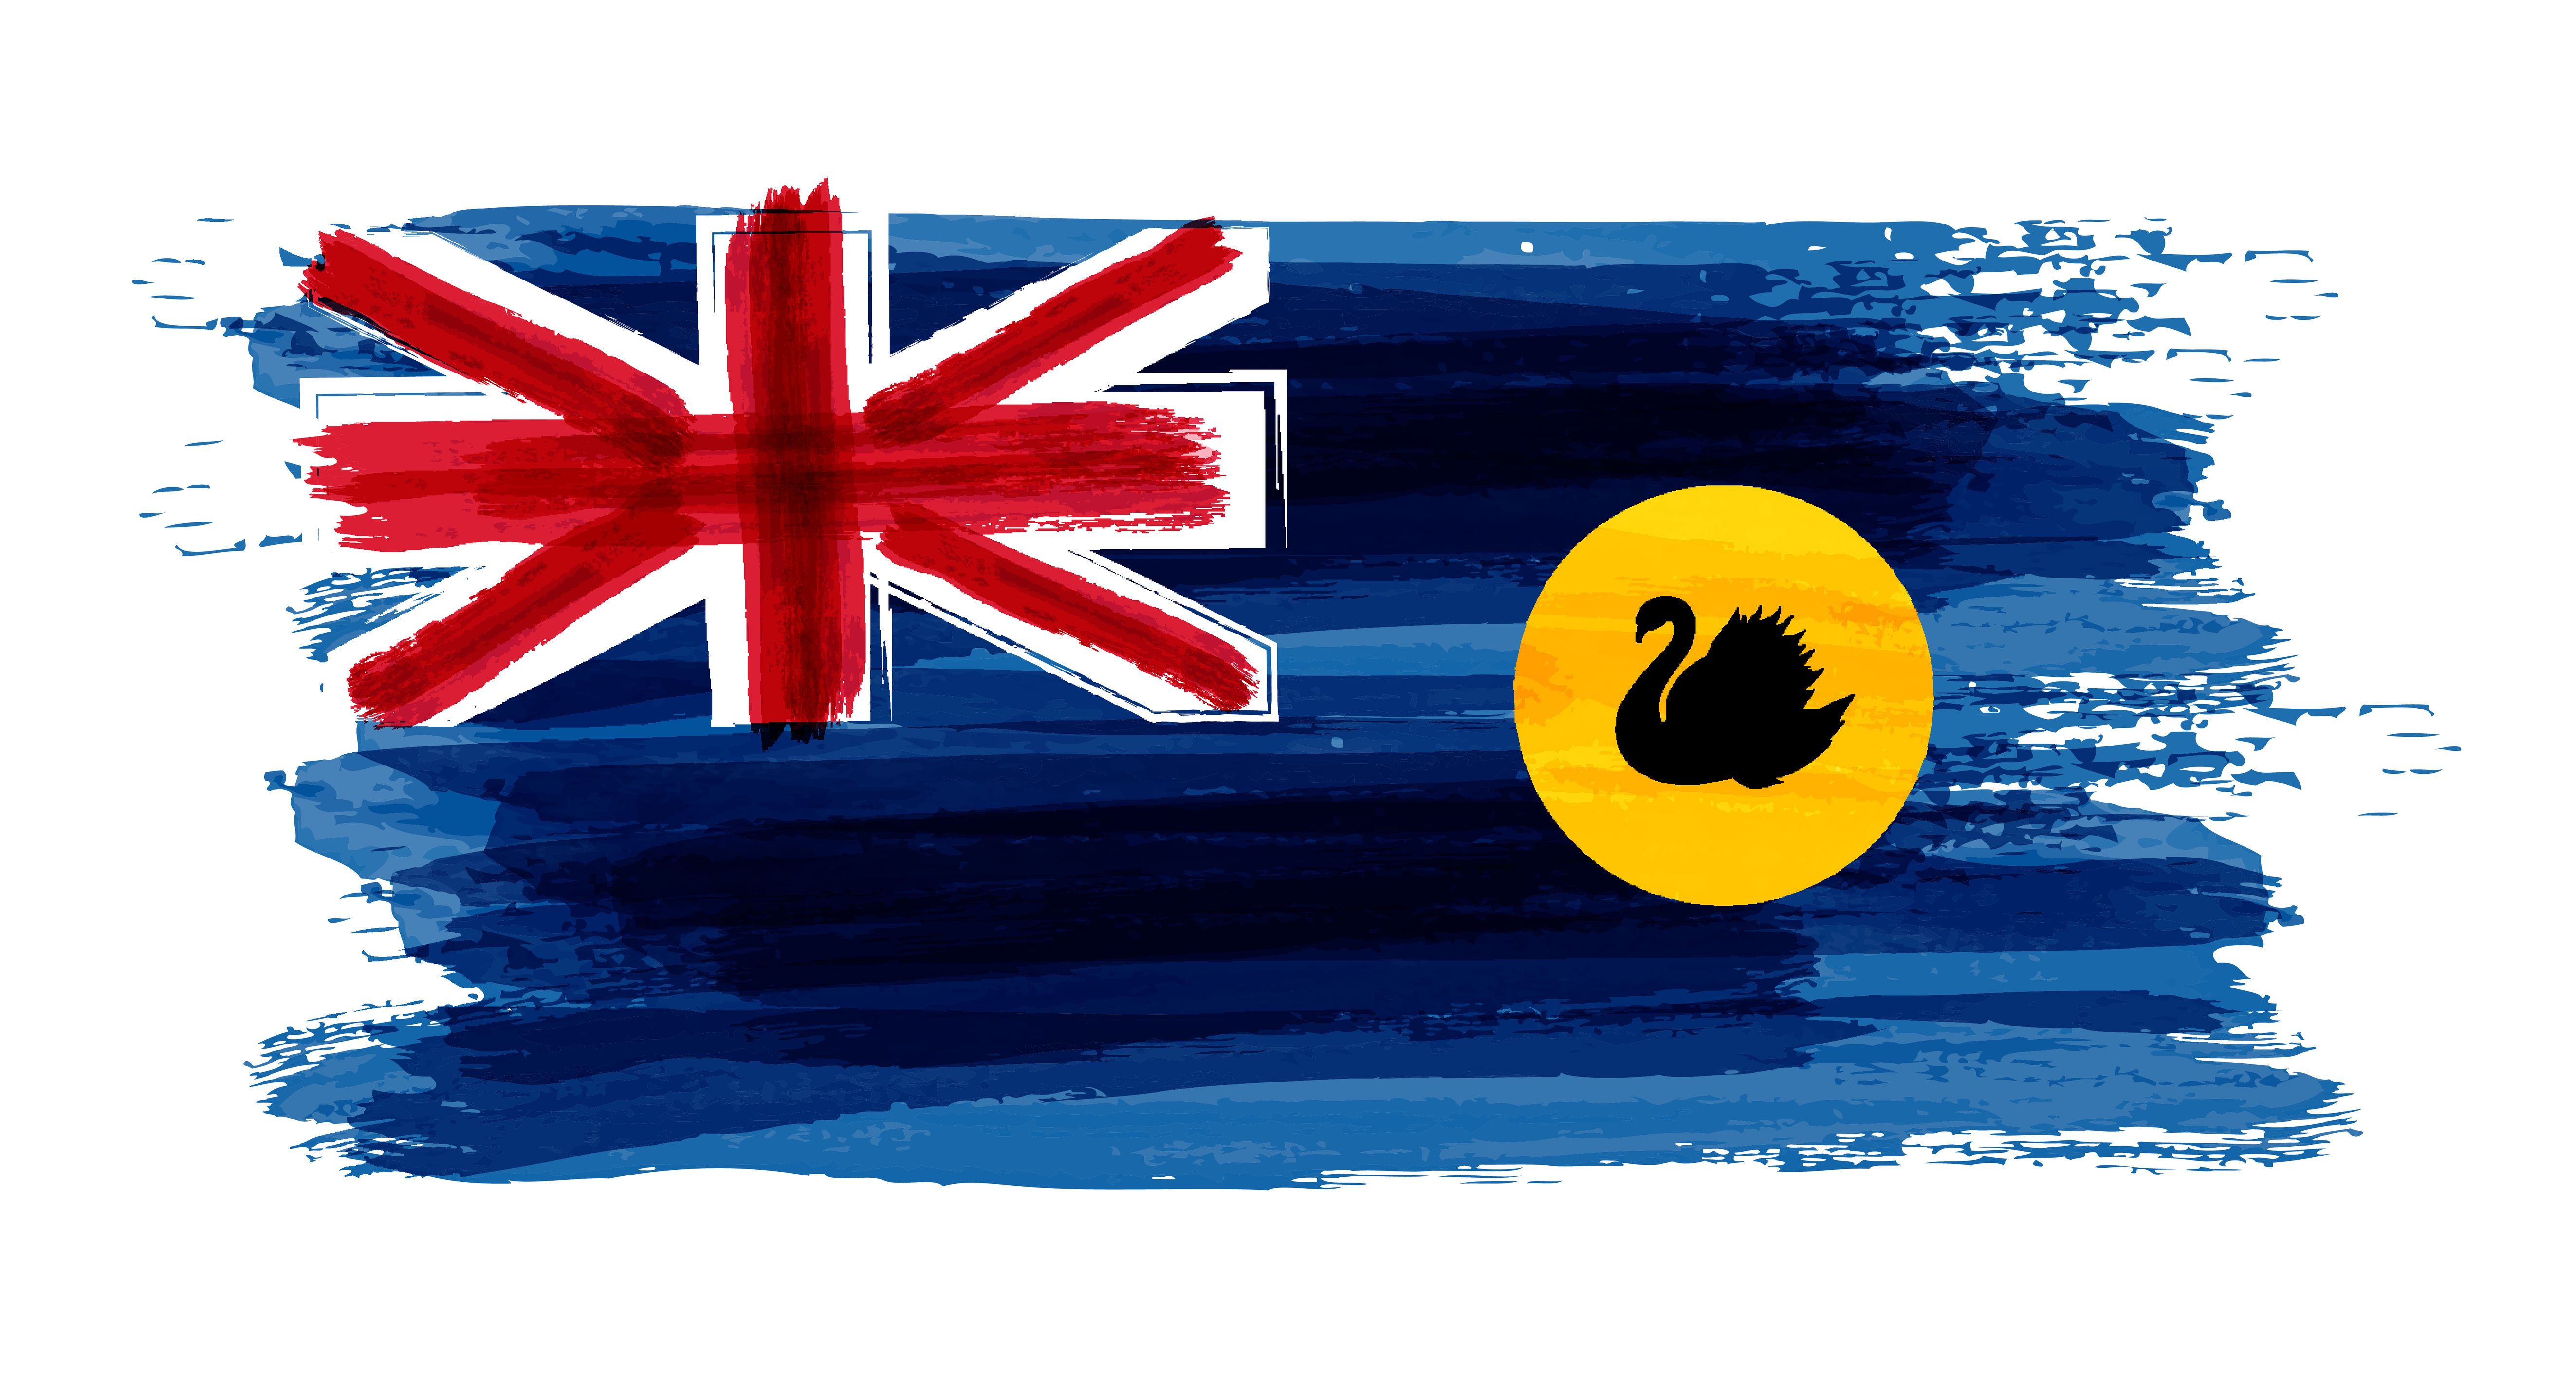 An illustration of the Western Australian flag